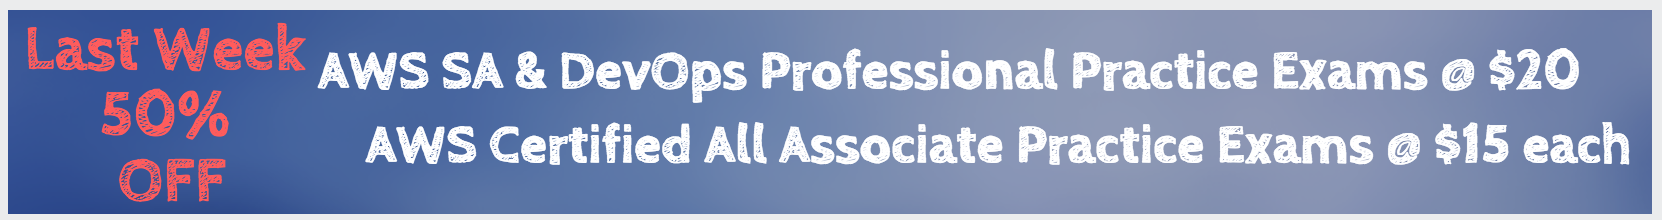 Braincert-AWS-Certified-SA-Professional-Practice-Exam